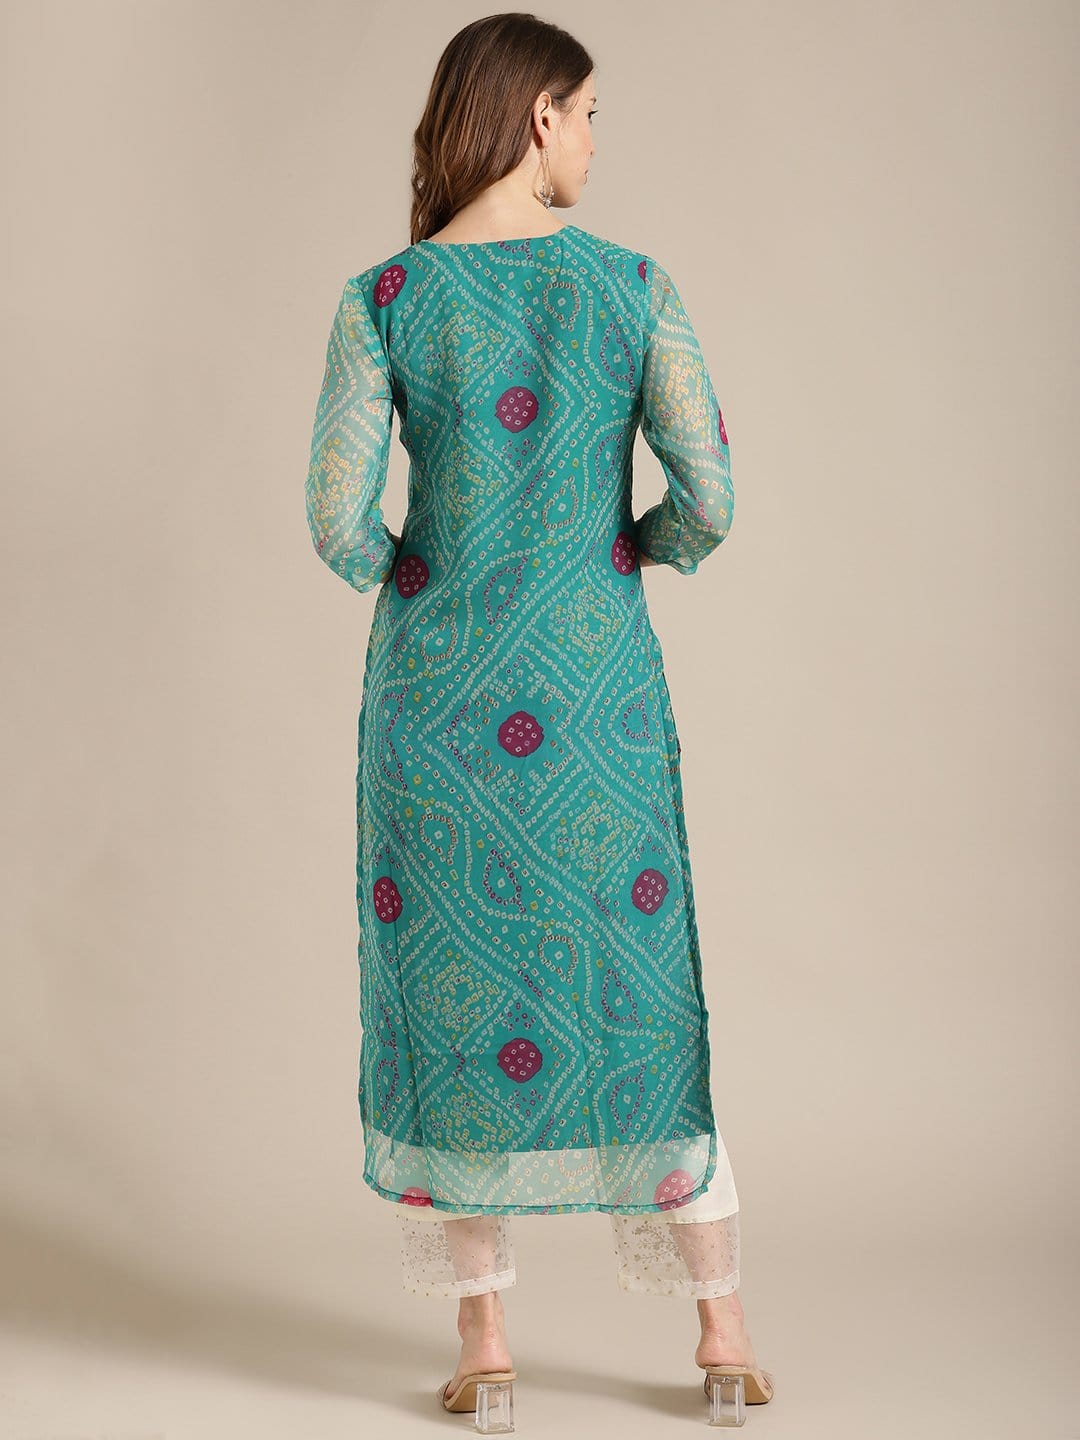 Women's Turquoise Blue And Pink Gota Patti Embroidery Embellished Kurta - Final Clearance Sale